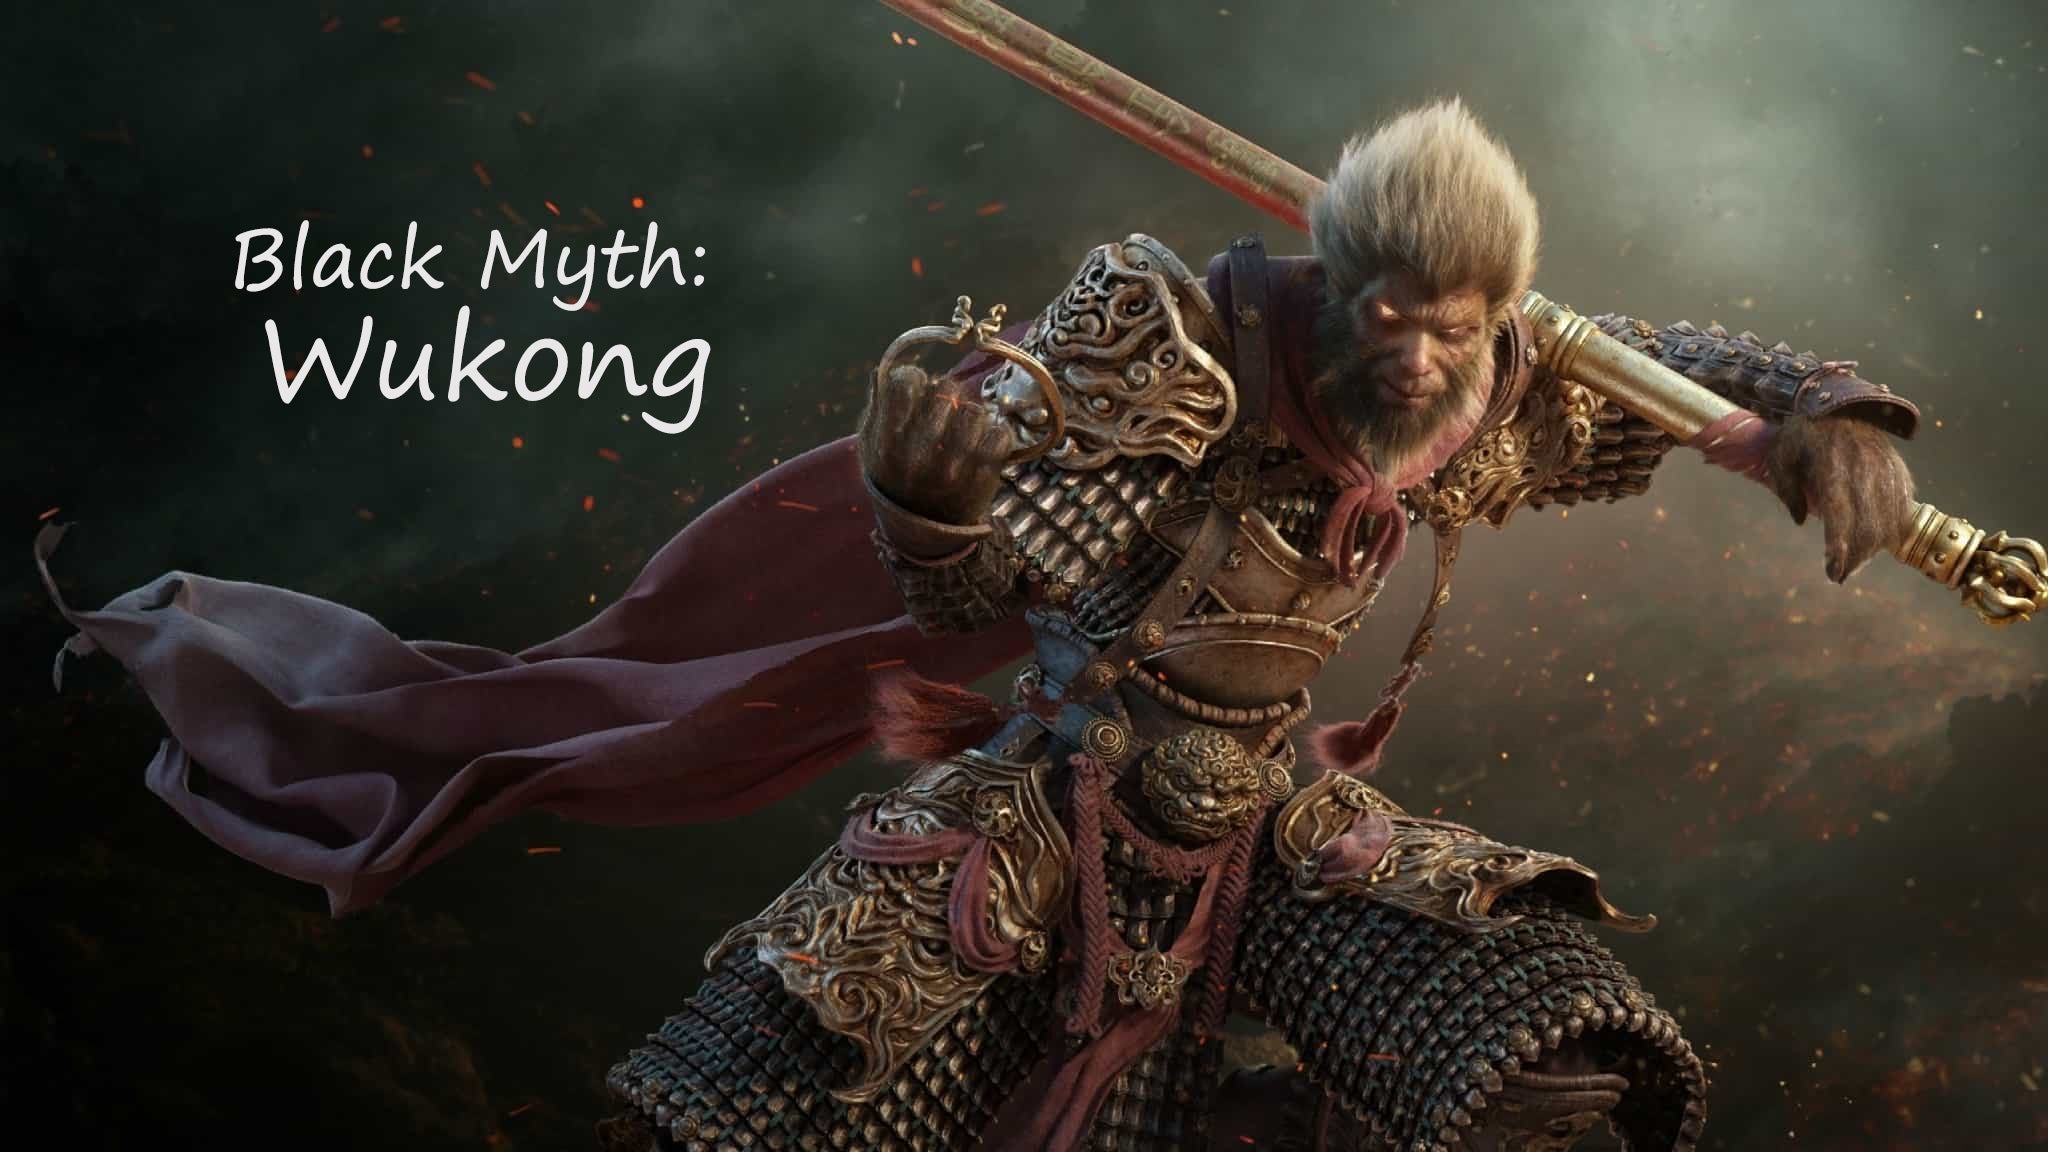 Into Mythology: Early Access to Black Myth: Wukong